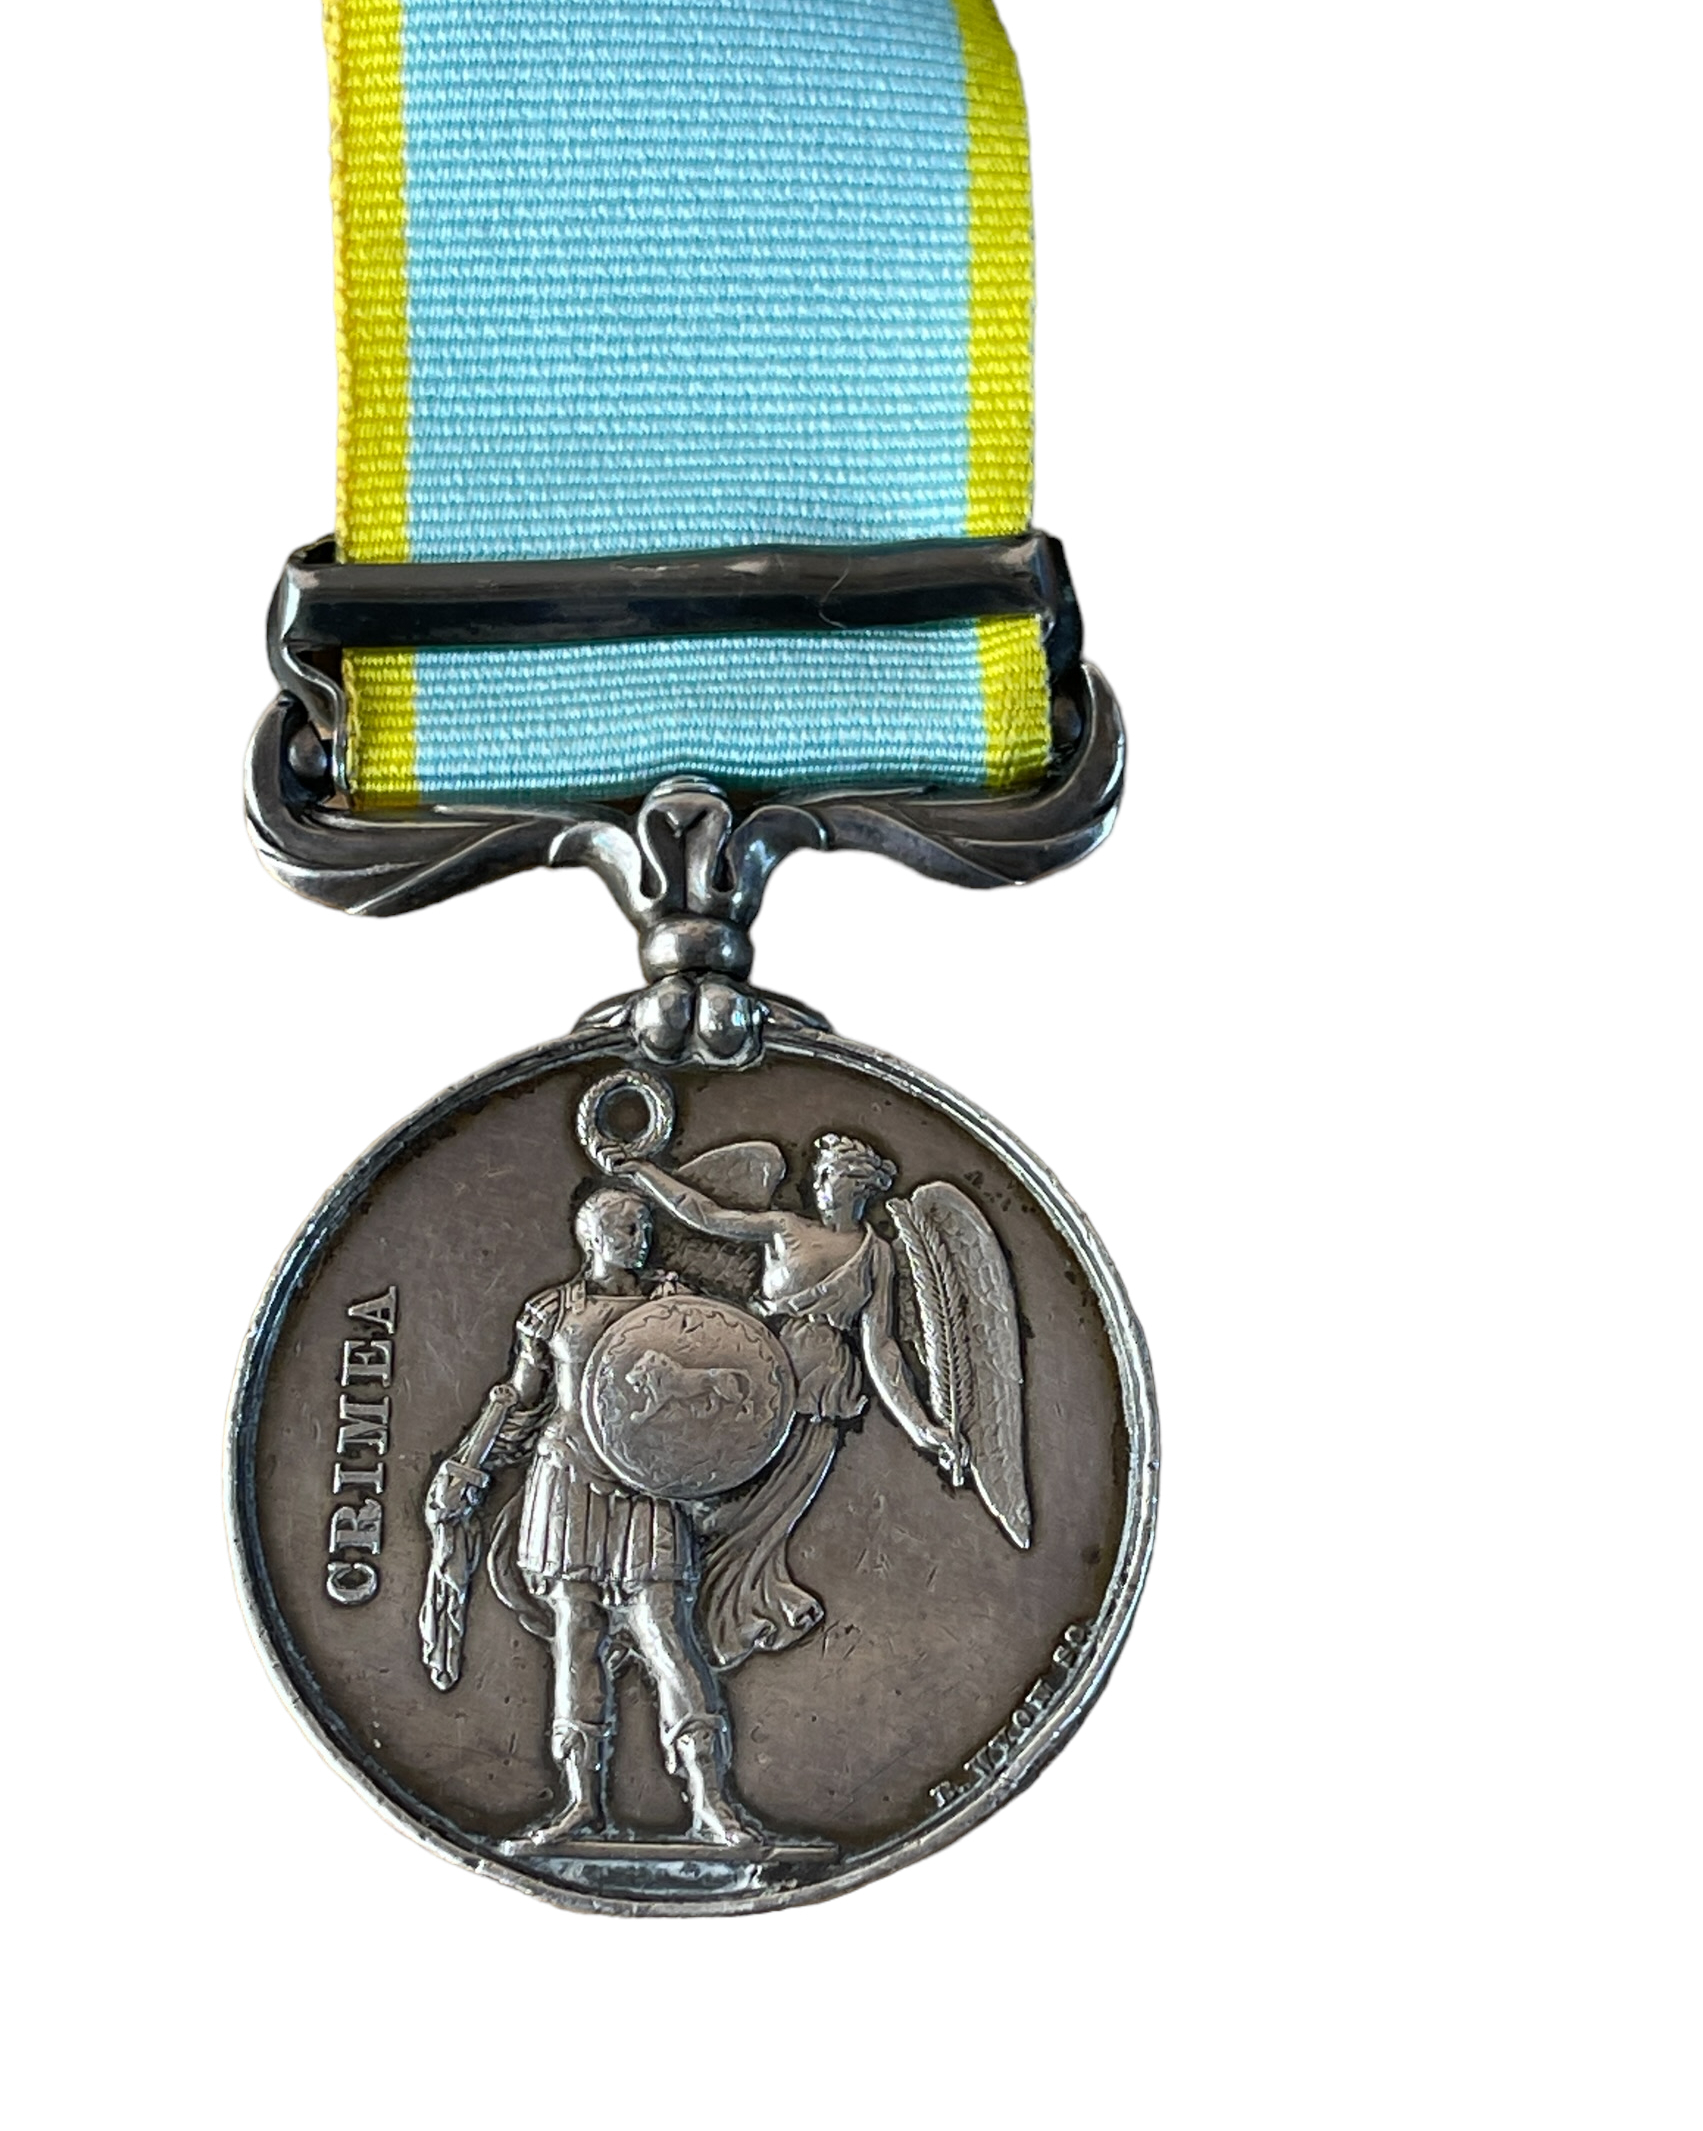 Crimea Sebastopol Medal to a: John Gladstone 79th Regiment.